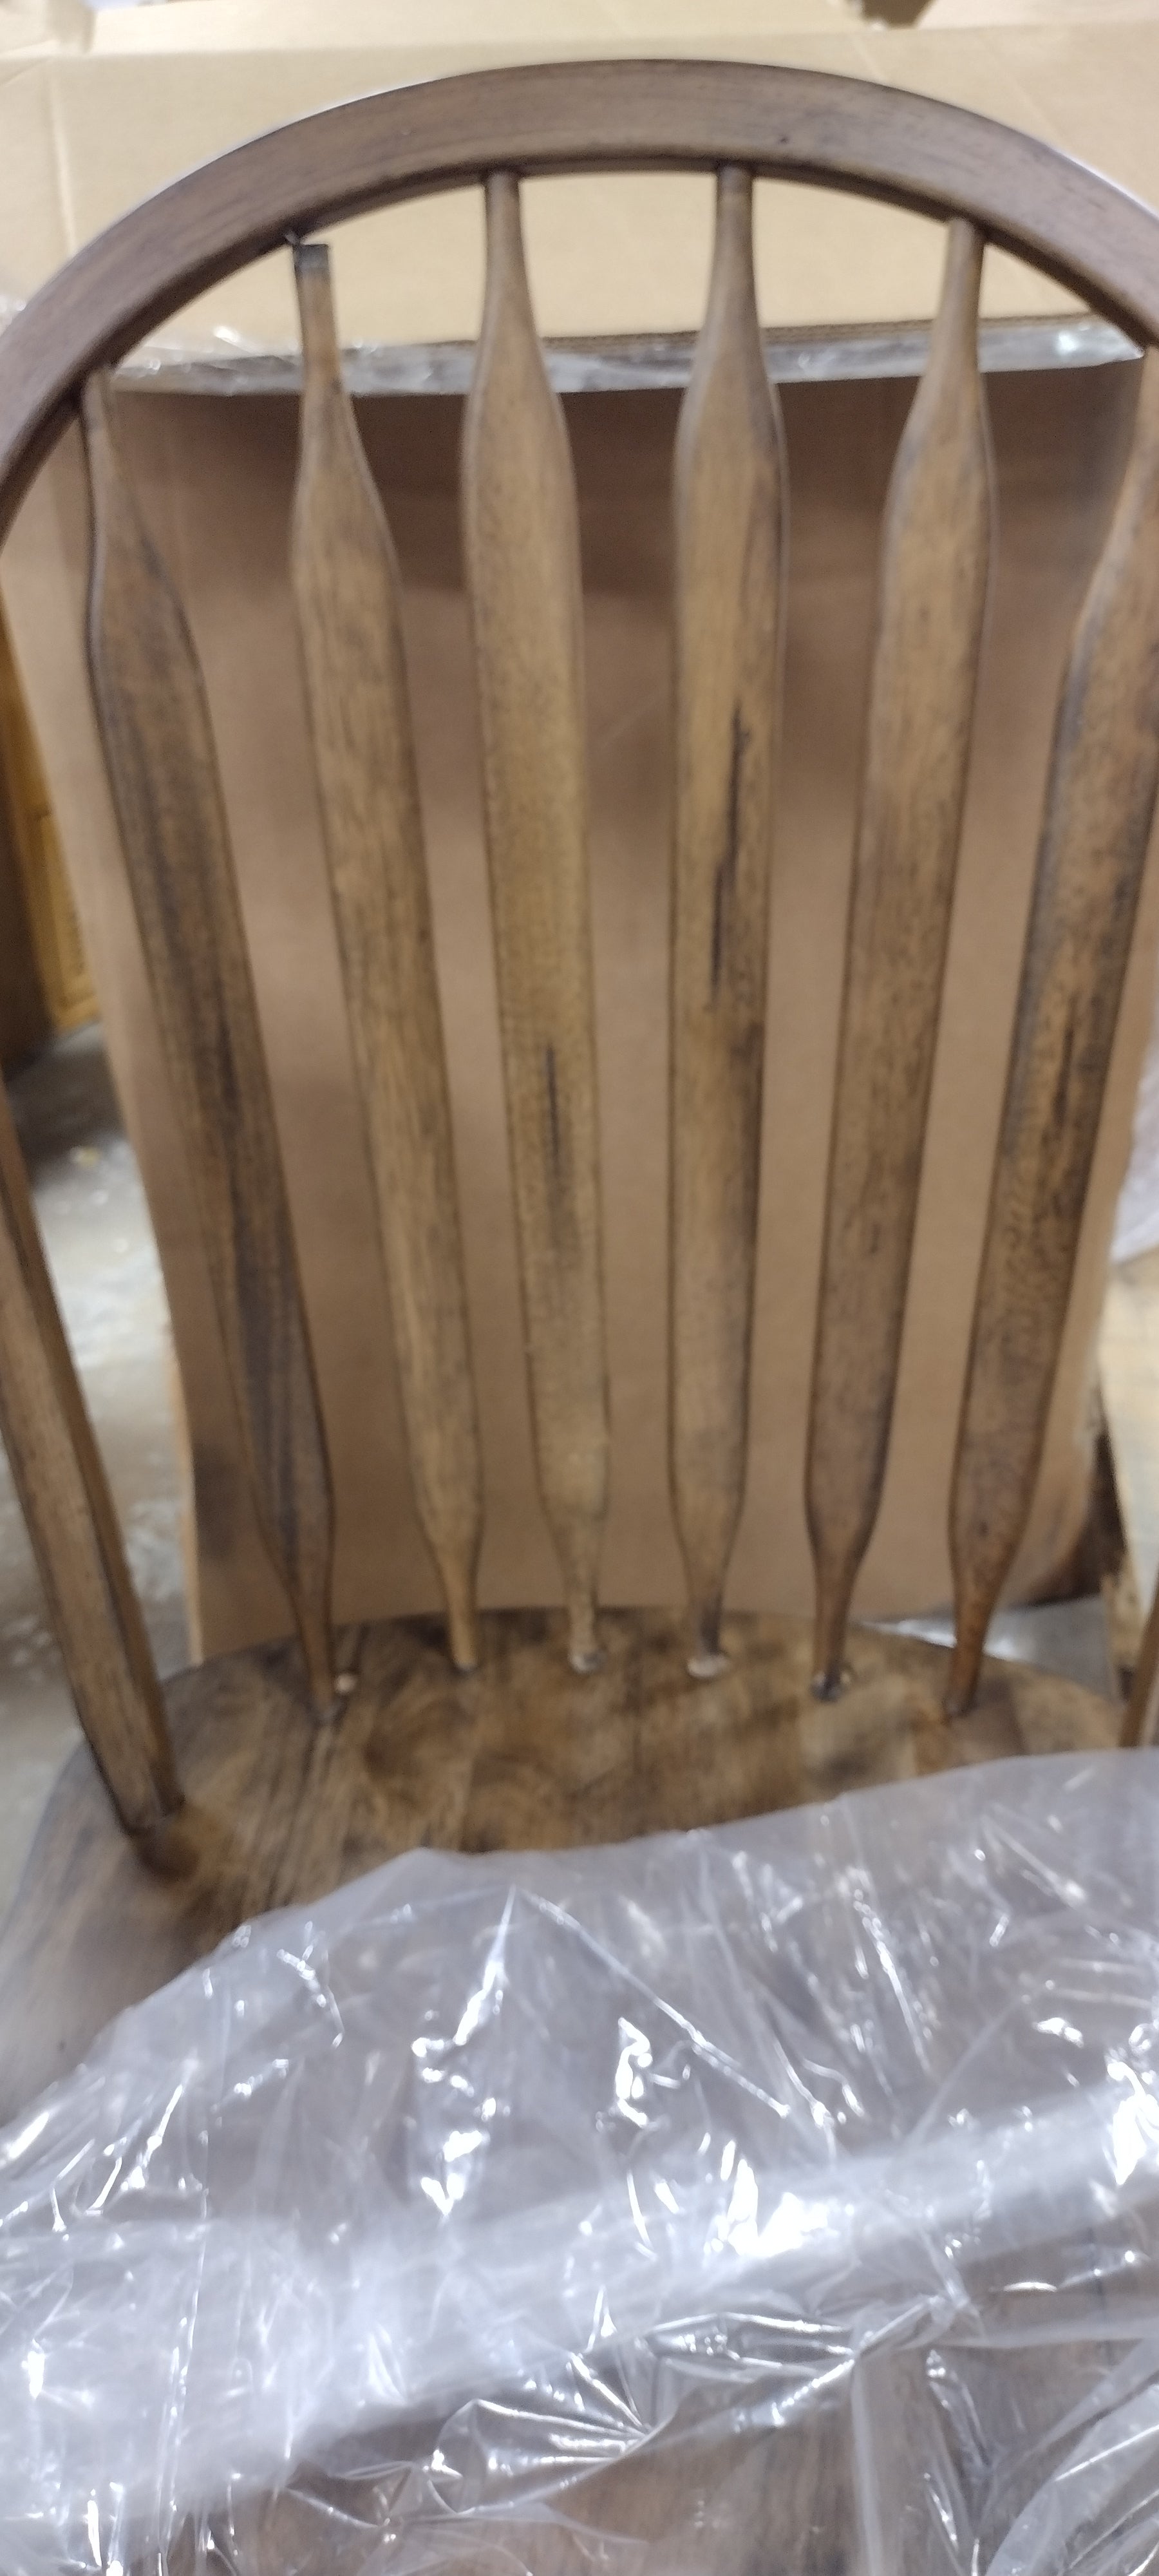 Judge Solid Wood Windsor Back Side Chair in Antique Honey (Set of 2)